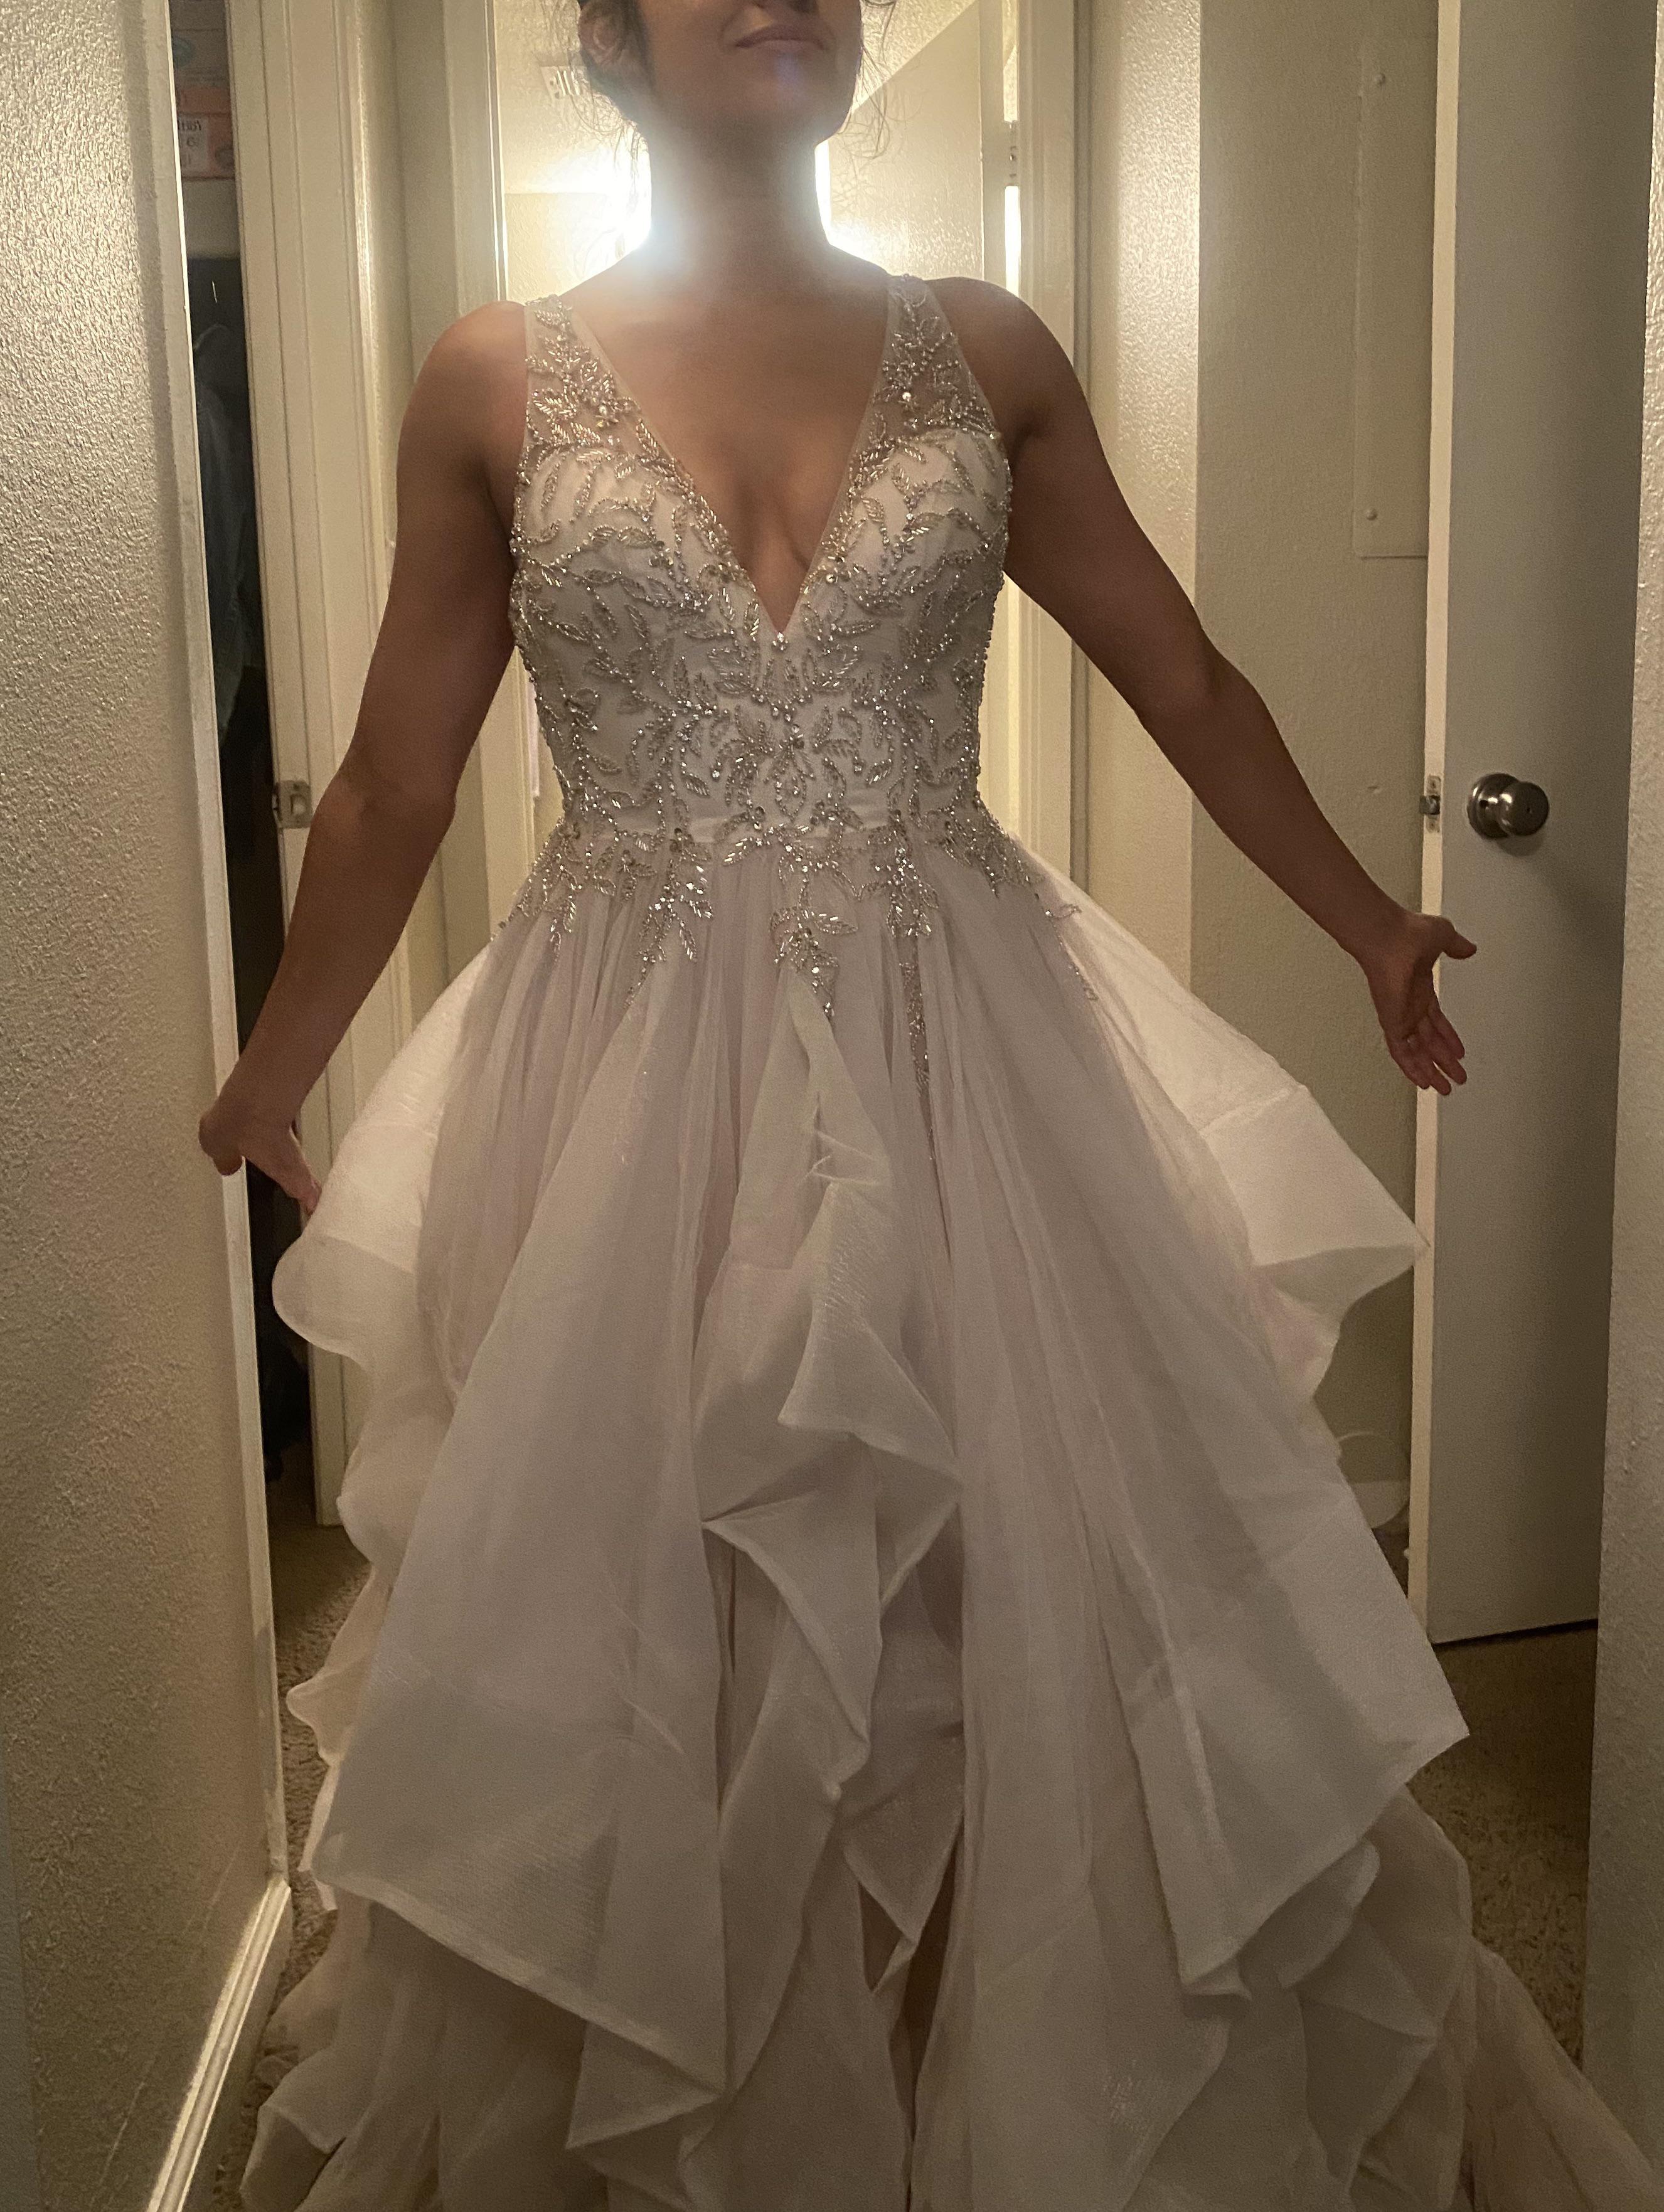 A Reddit user's wedding dress uploaded on the platform on August 22, 2020 | Source: Reddit/ThriftStoreHauls